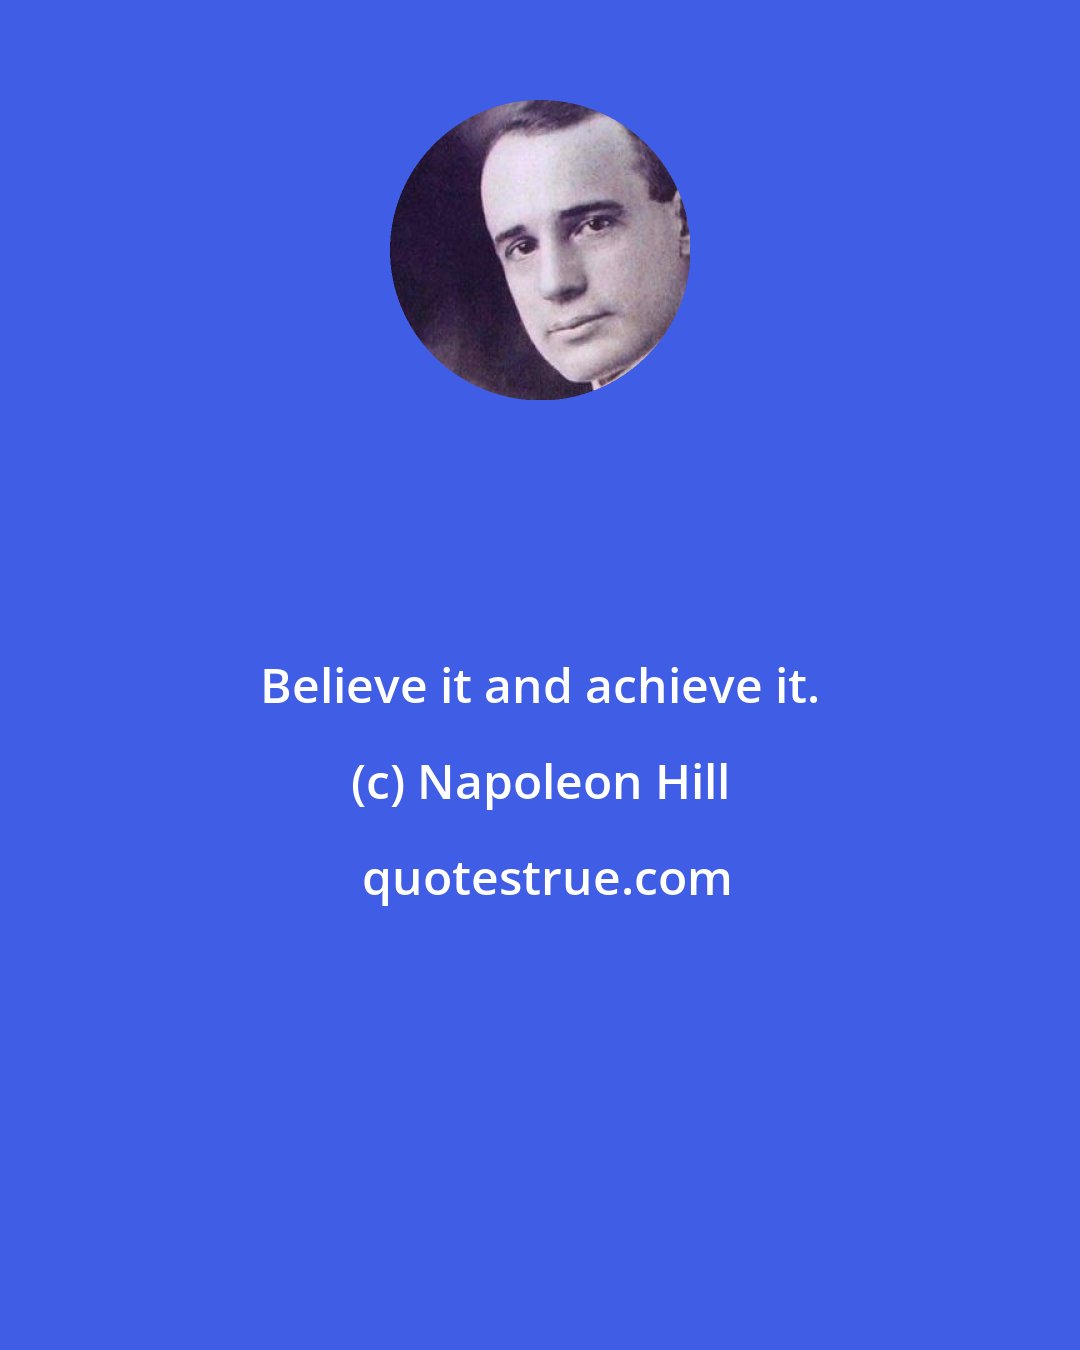 Napoleon Hill: Believe it and achieve it.